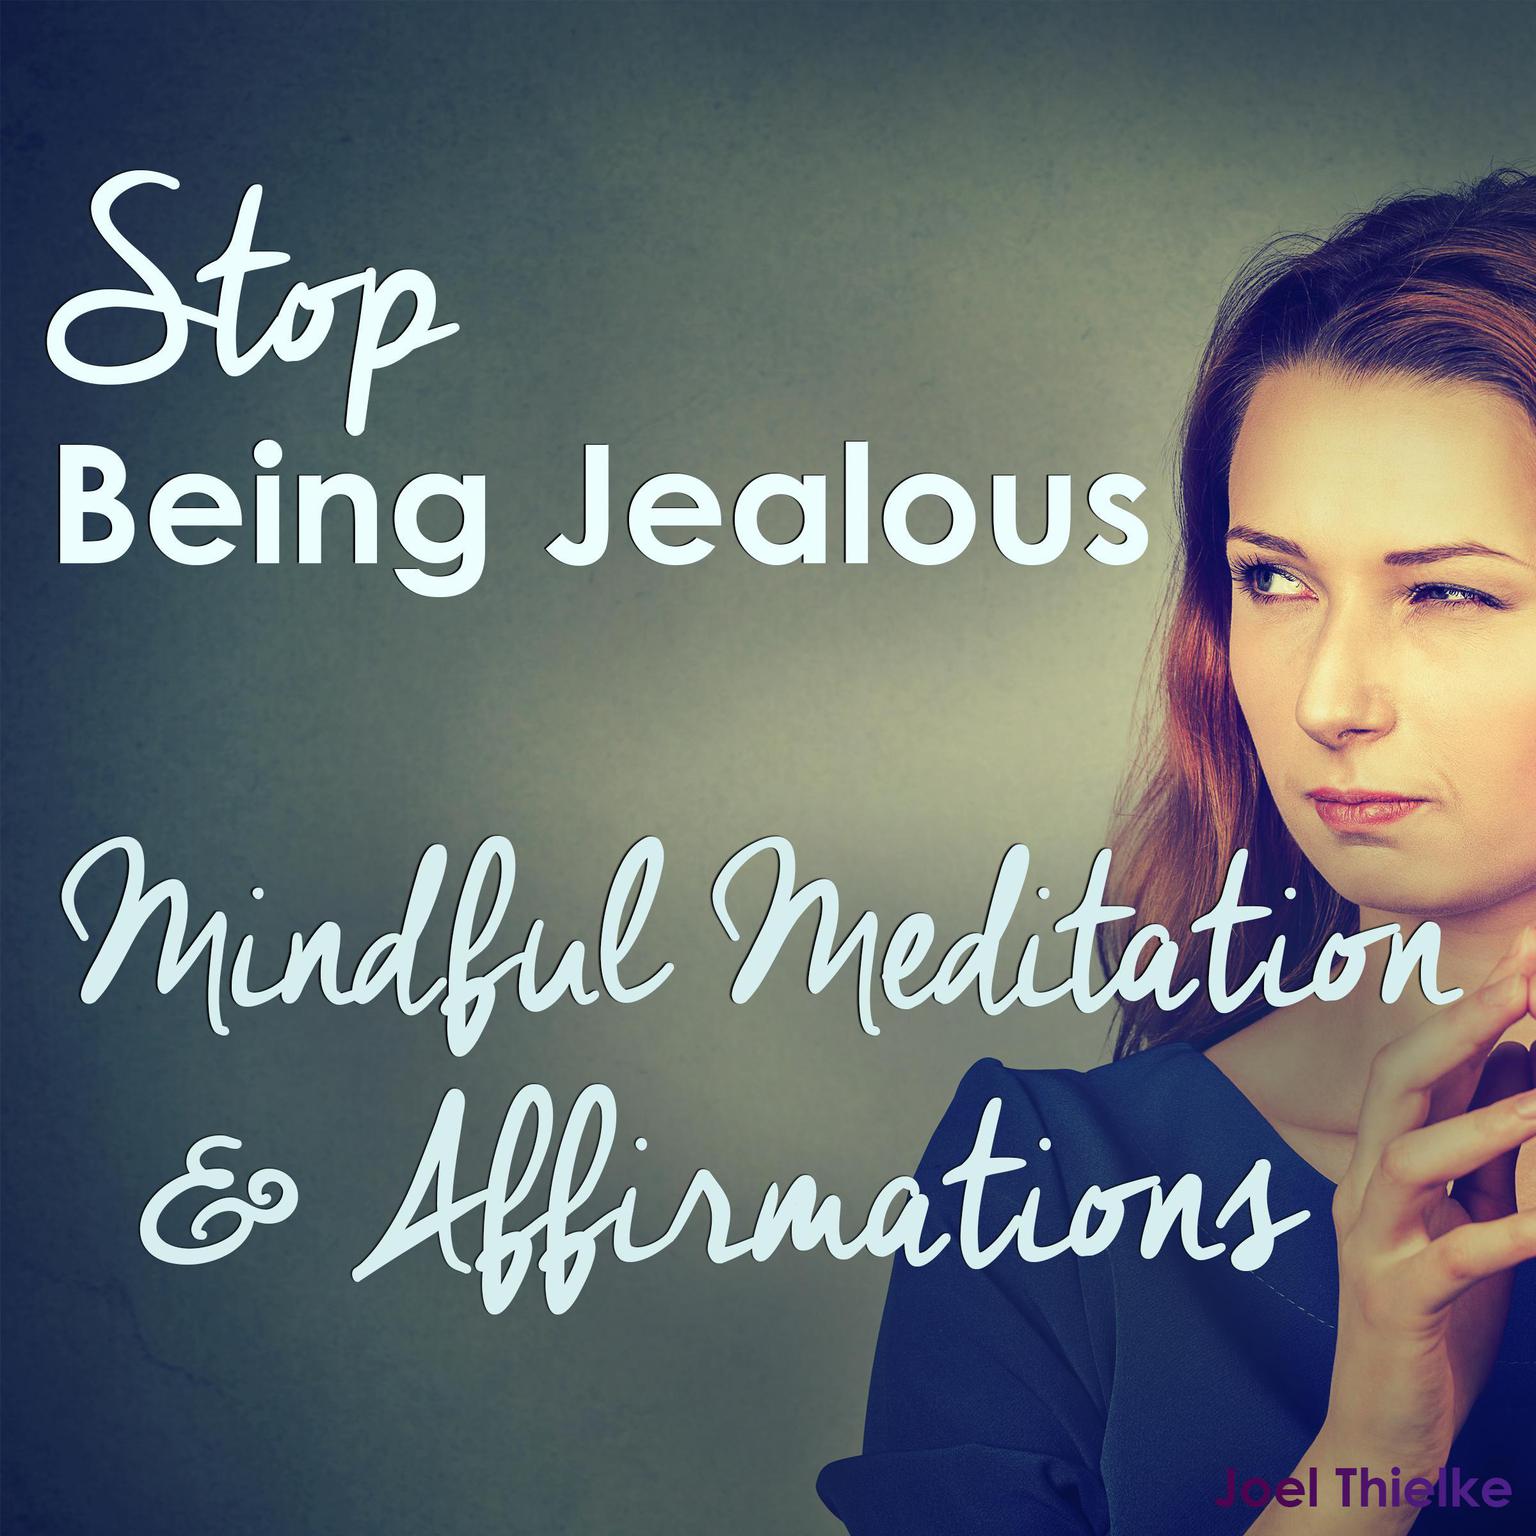 Stop Being Jealous - Mindful Meditation & Affirmations Audiobook, by Joel Thielke